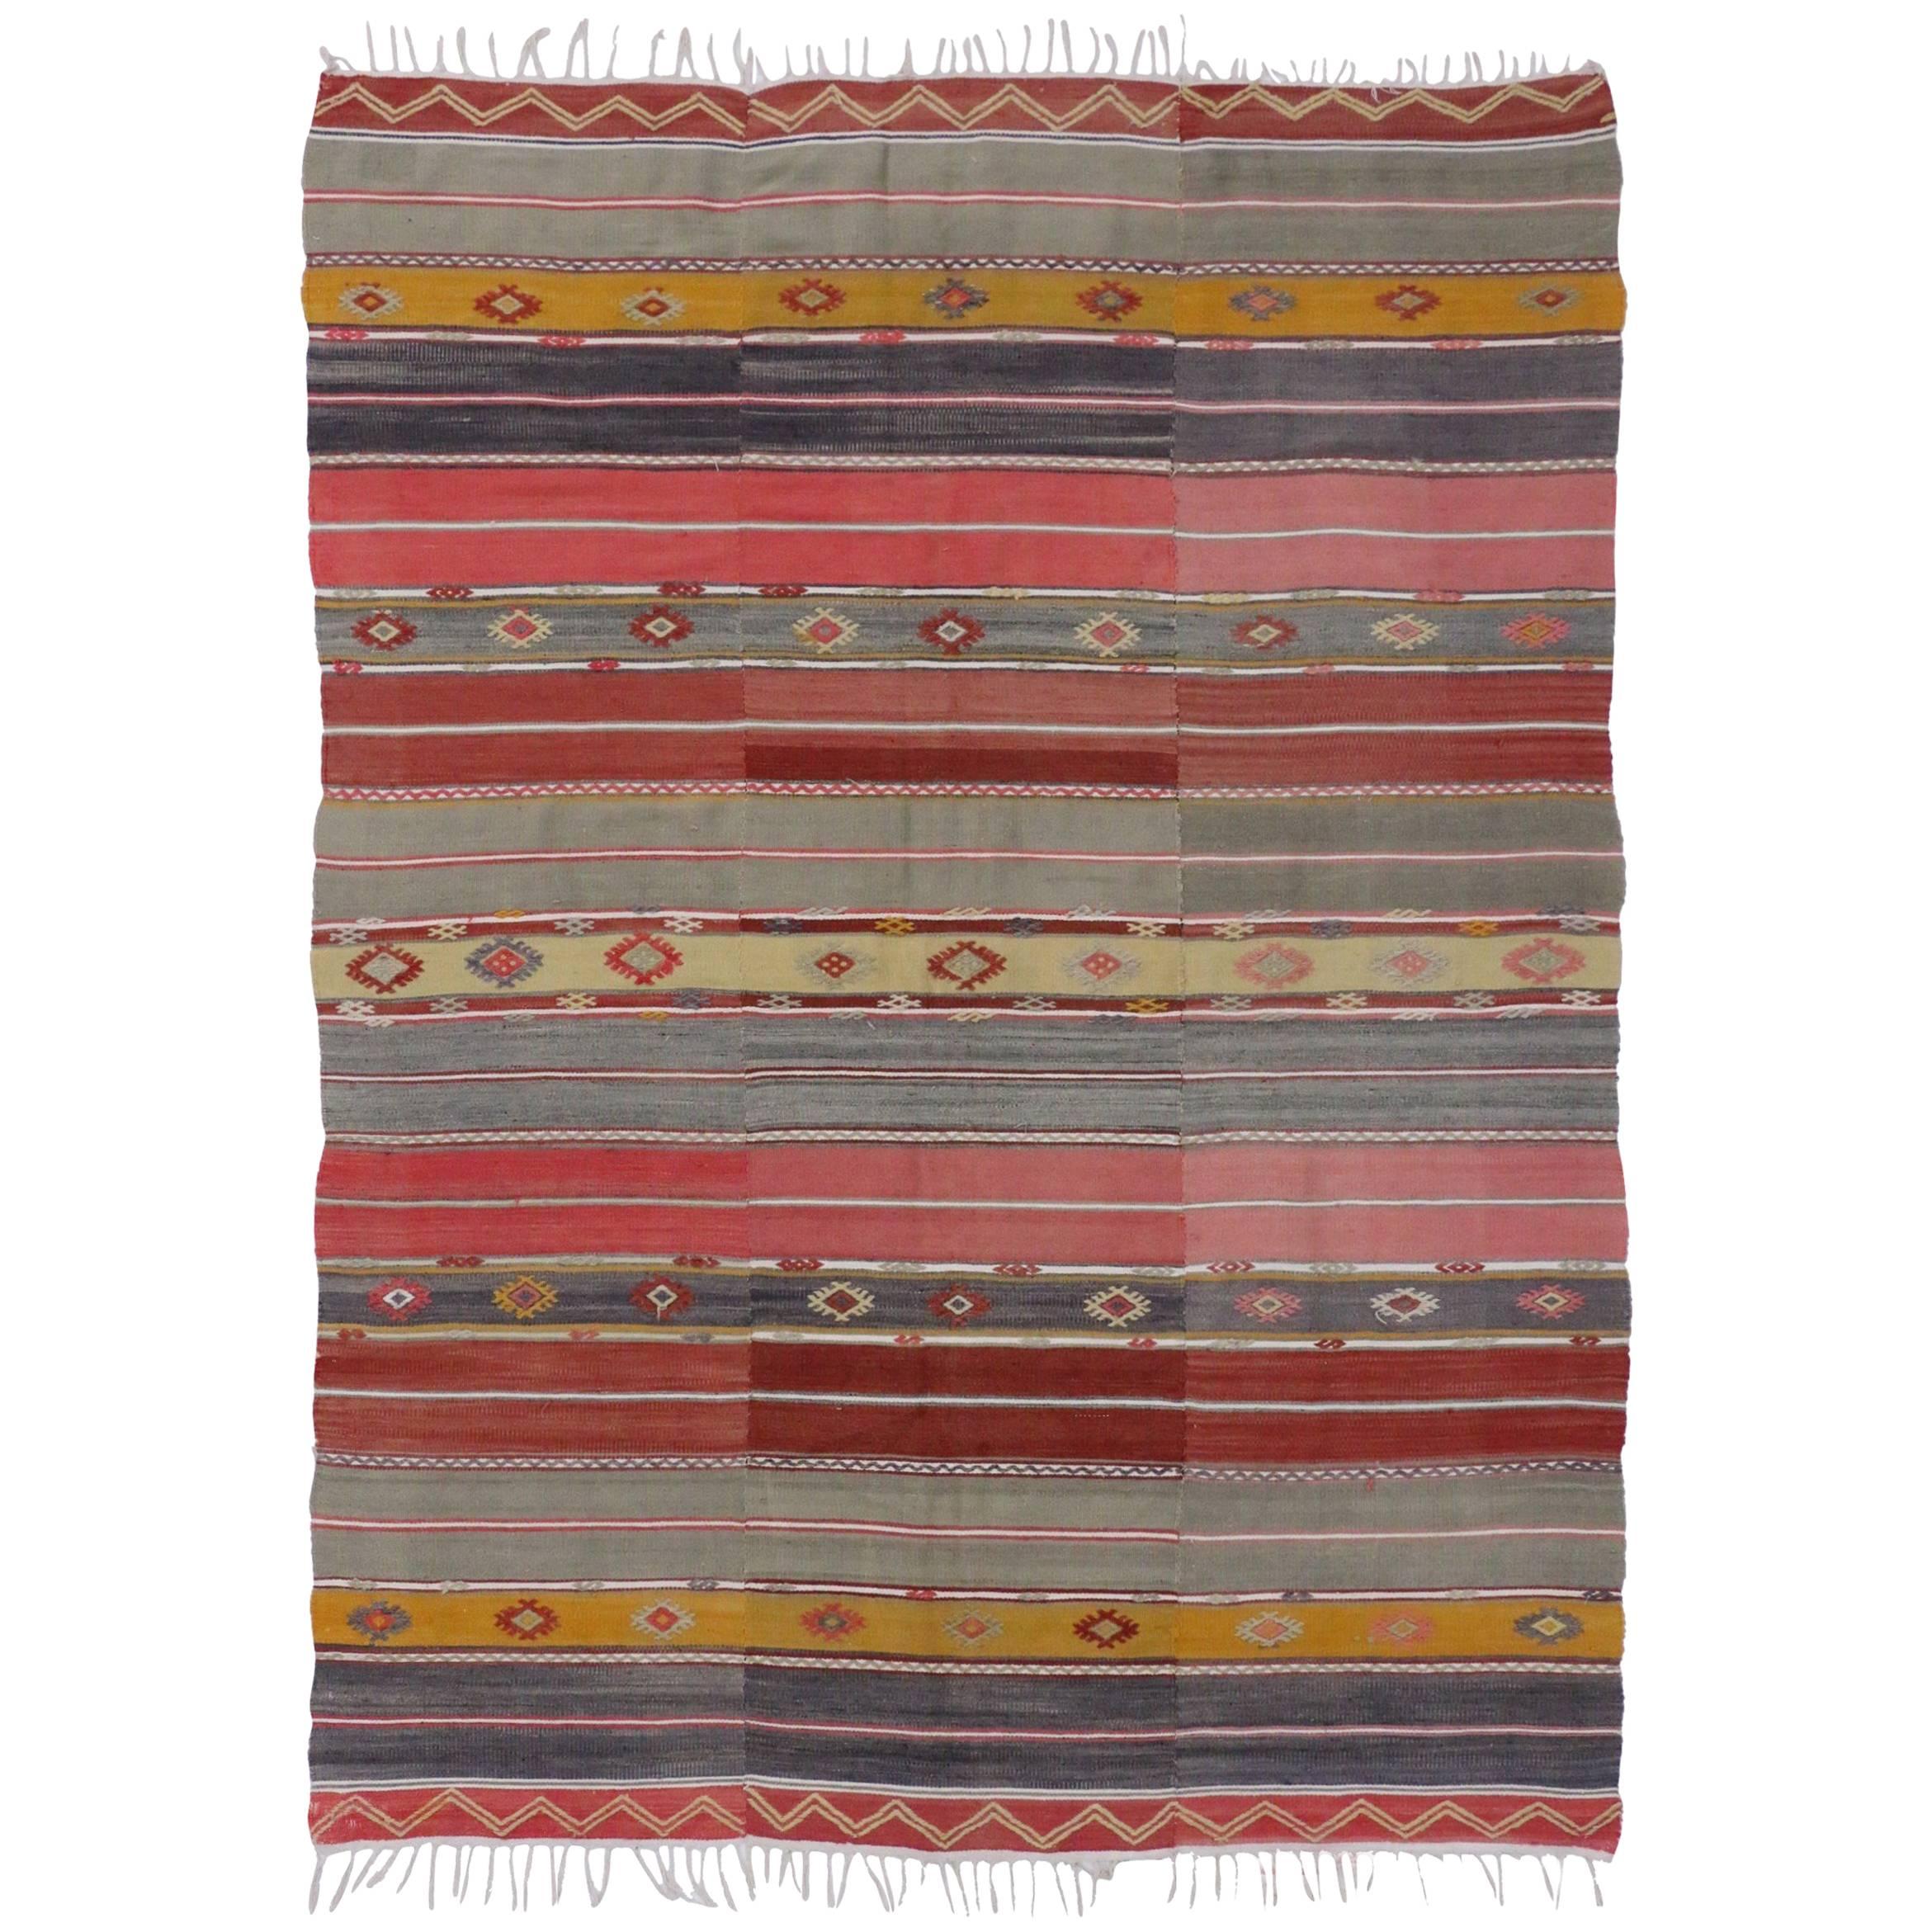 Boho Chic Vintage Turkish Kilim Rug, Flat-Weave Rug with Tribal Style